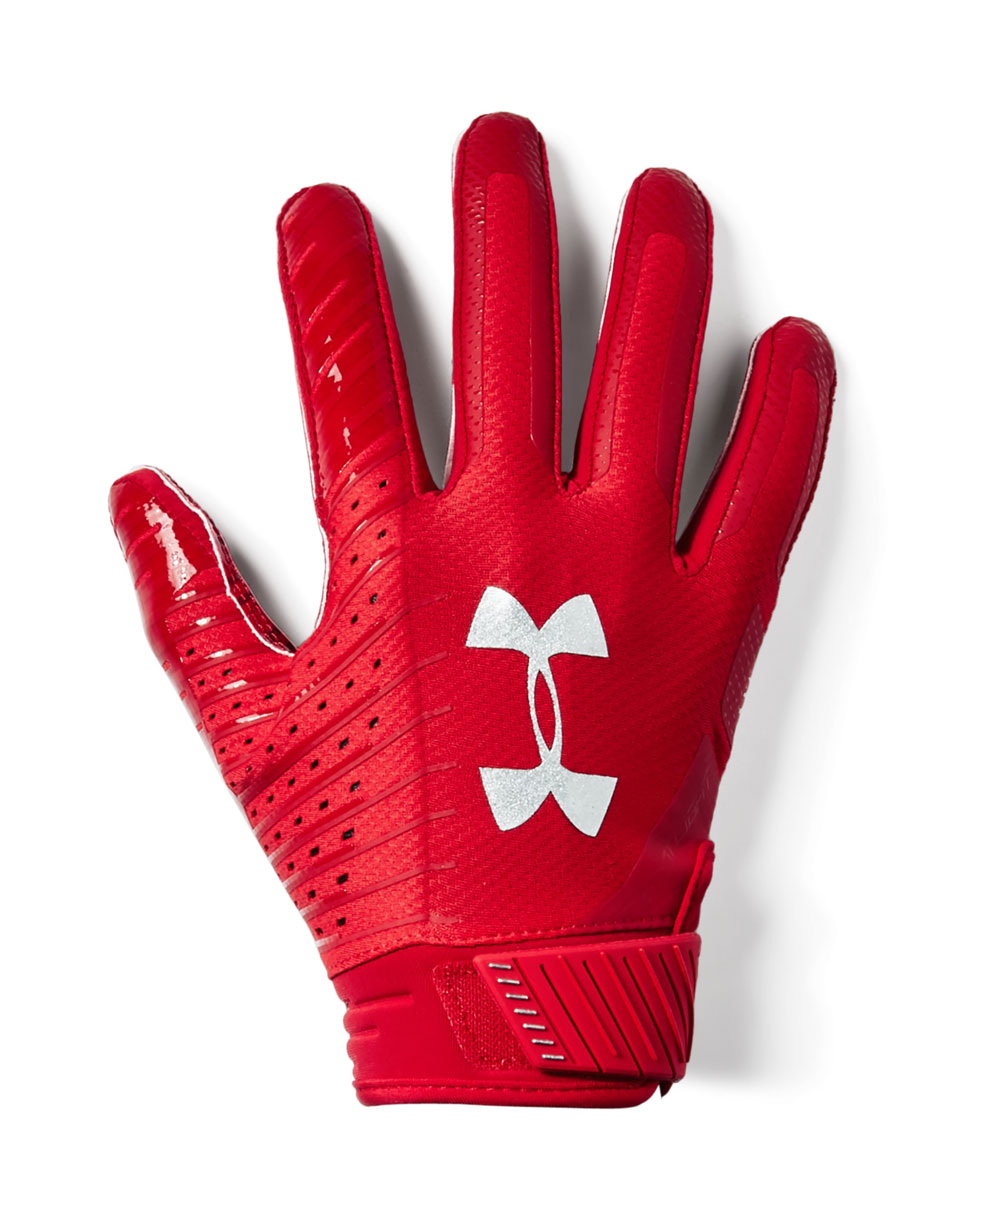 Under Armour Mens Spotlight Limited Edition Football Receiver Gloves 1297245-600 